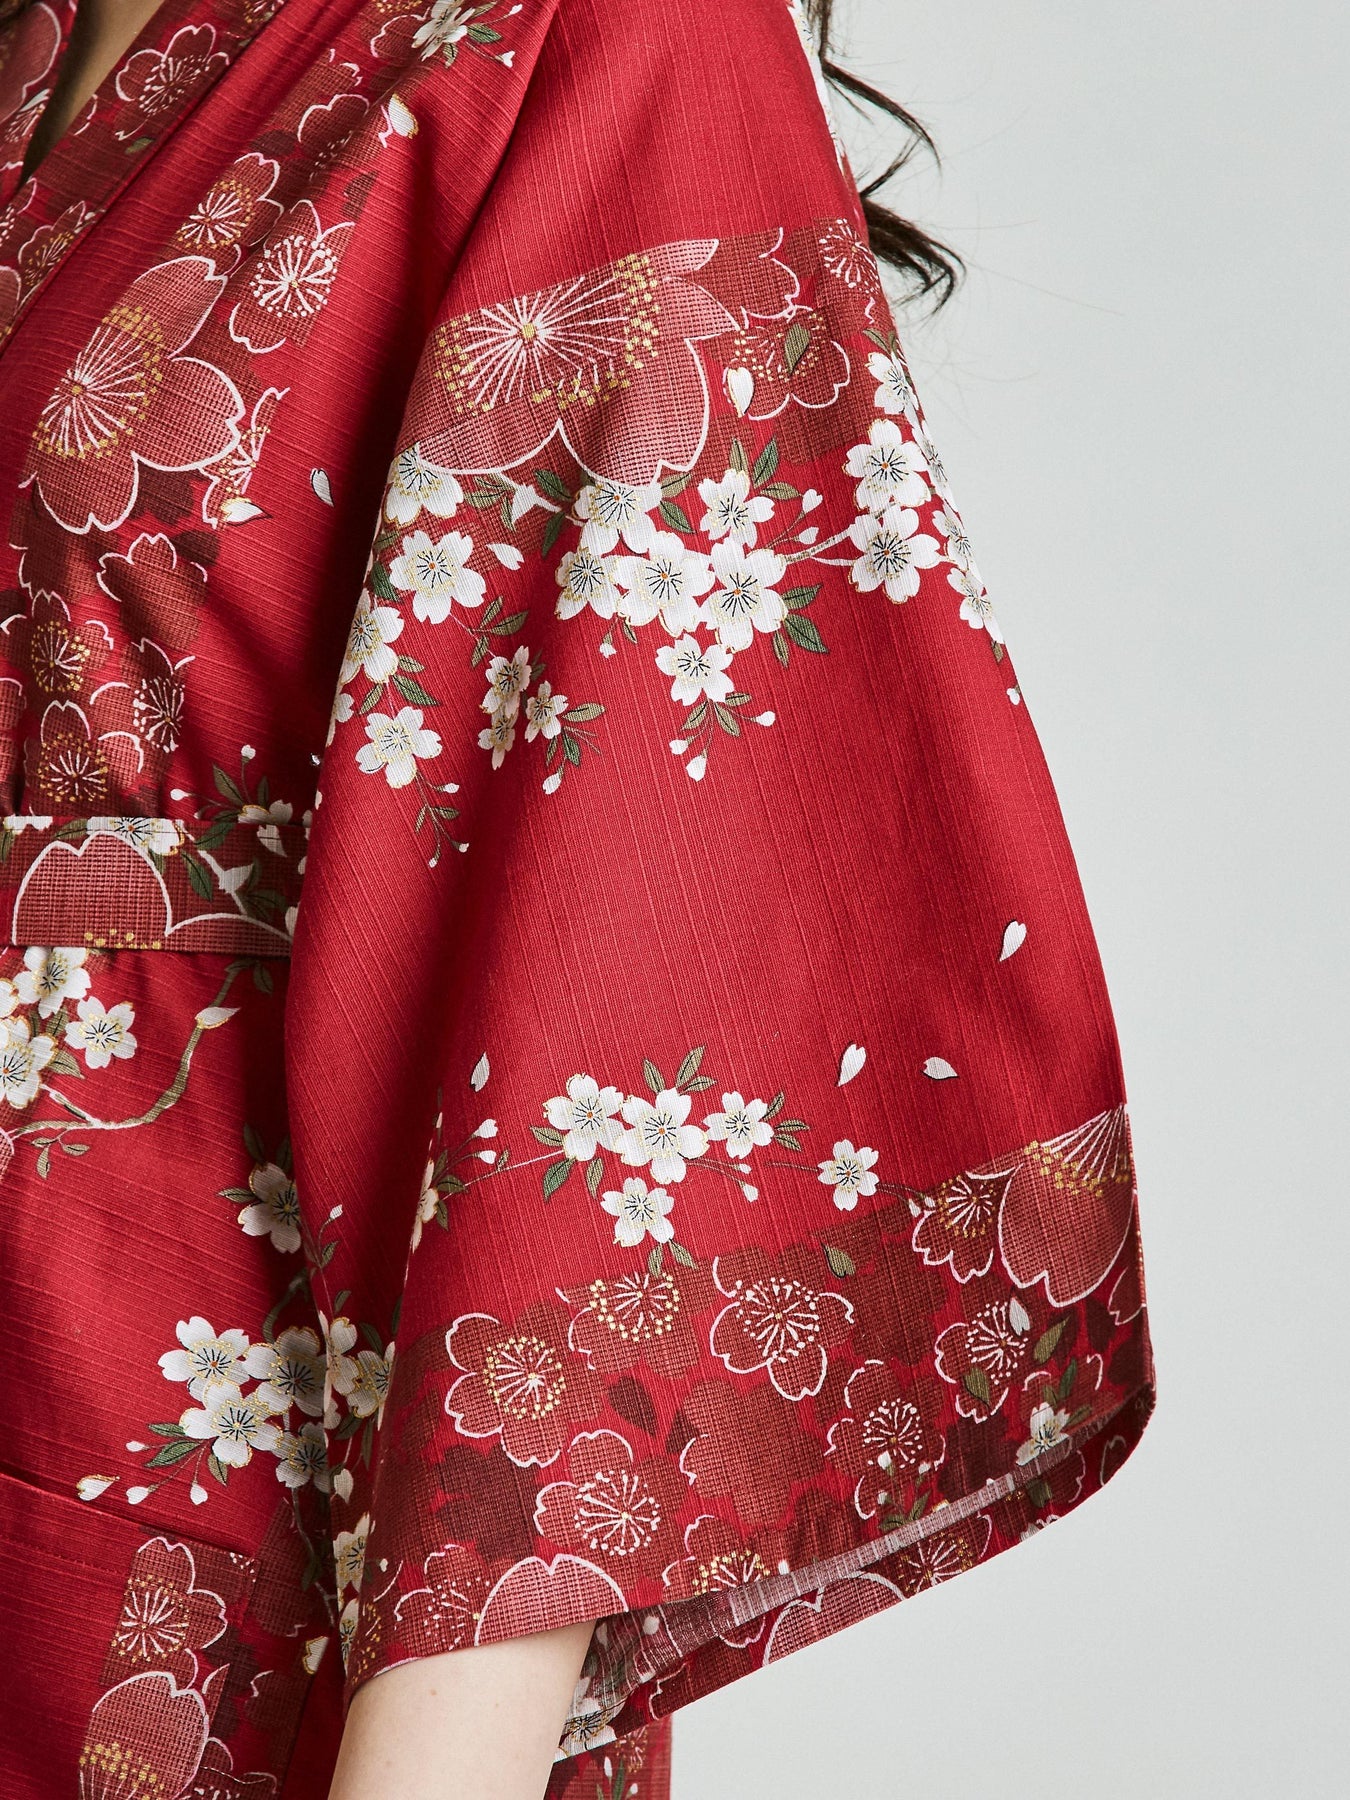 Cherry Blossom Cotton Kimono Robe | Japan Objects Store